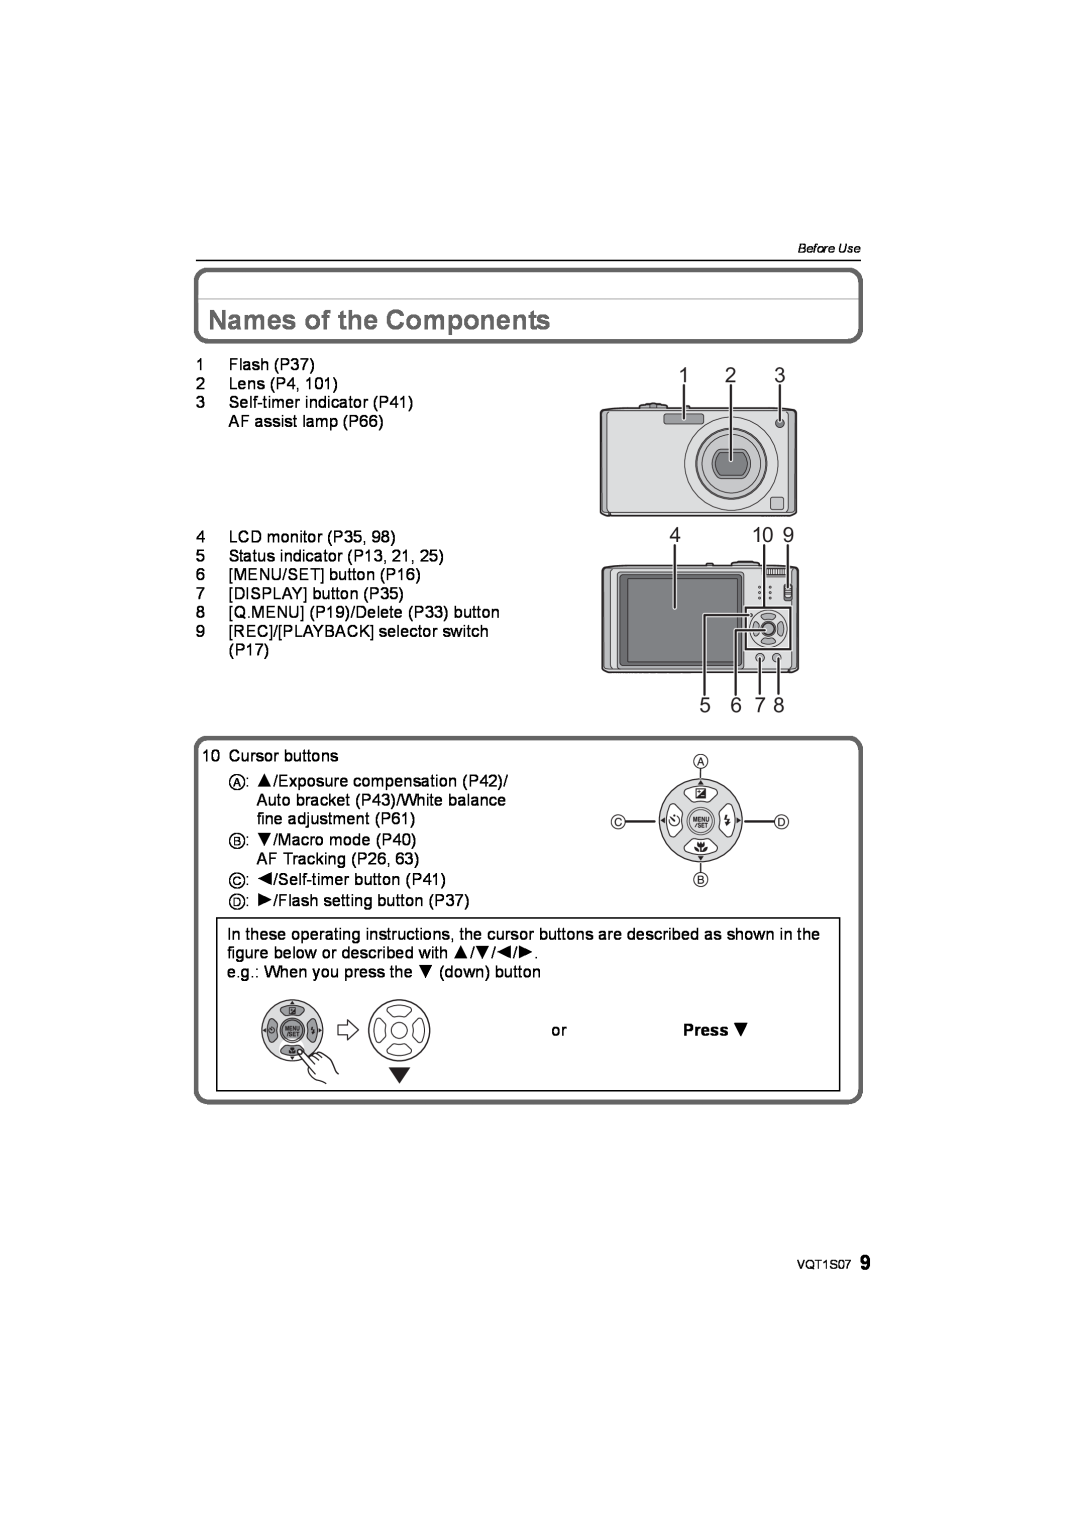 Panasonic DMC-FX38 operating instructions Names of the Components, 5 6 7, Press 